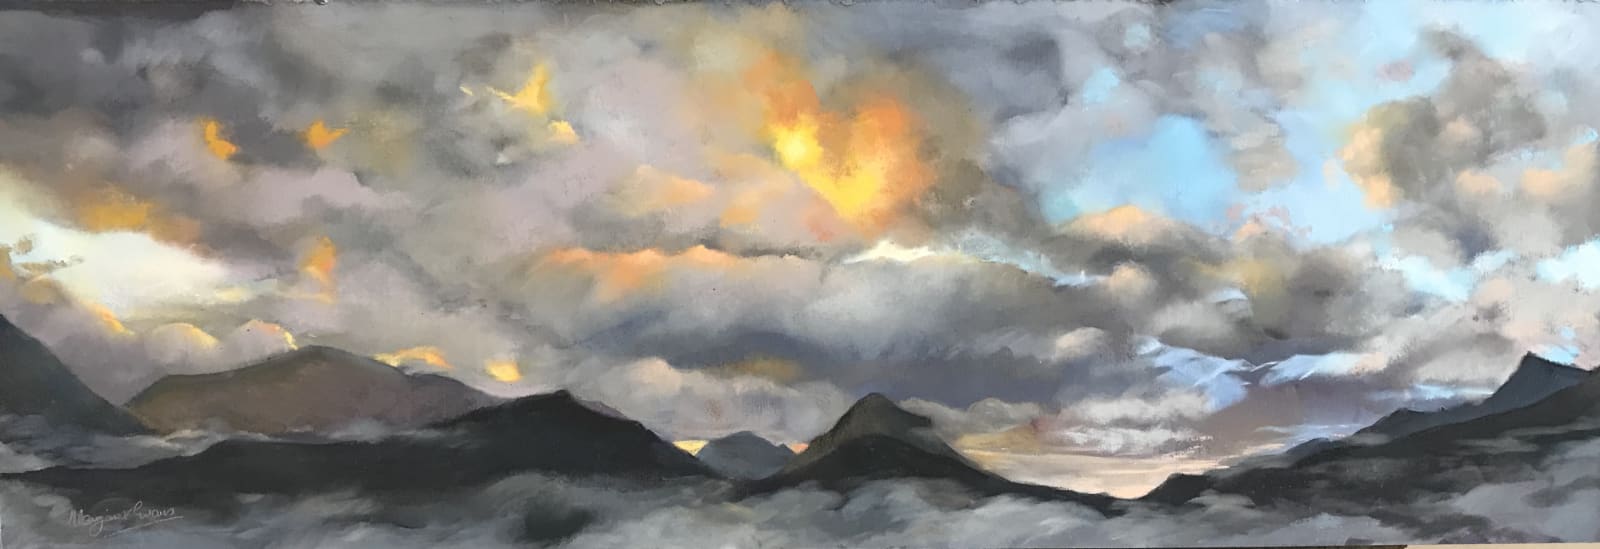 Margaret Evans, Above Cuillin Mists